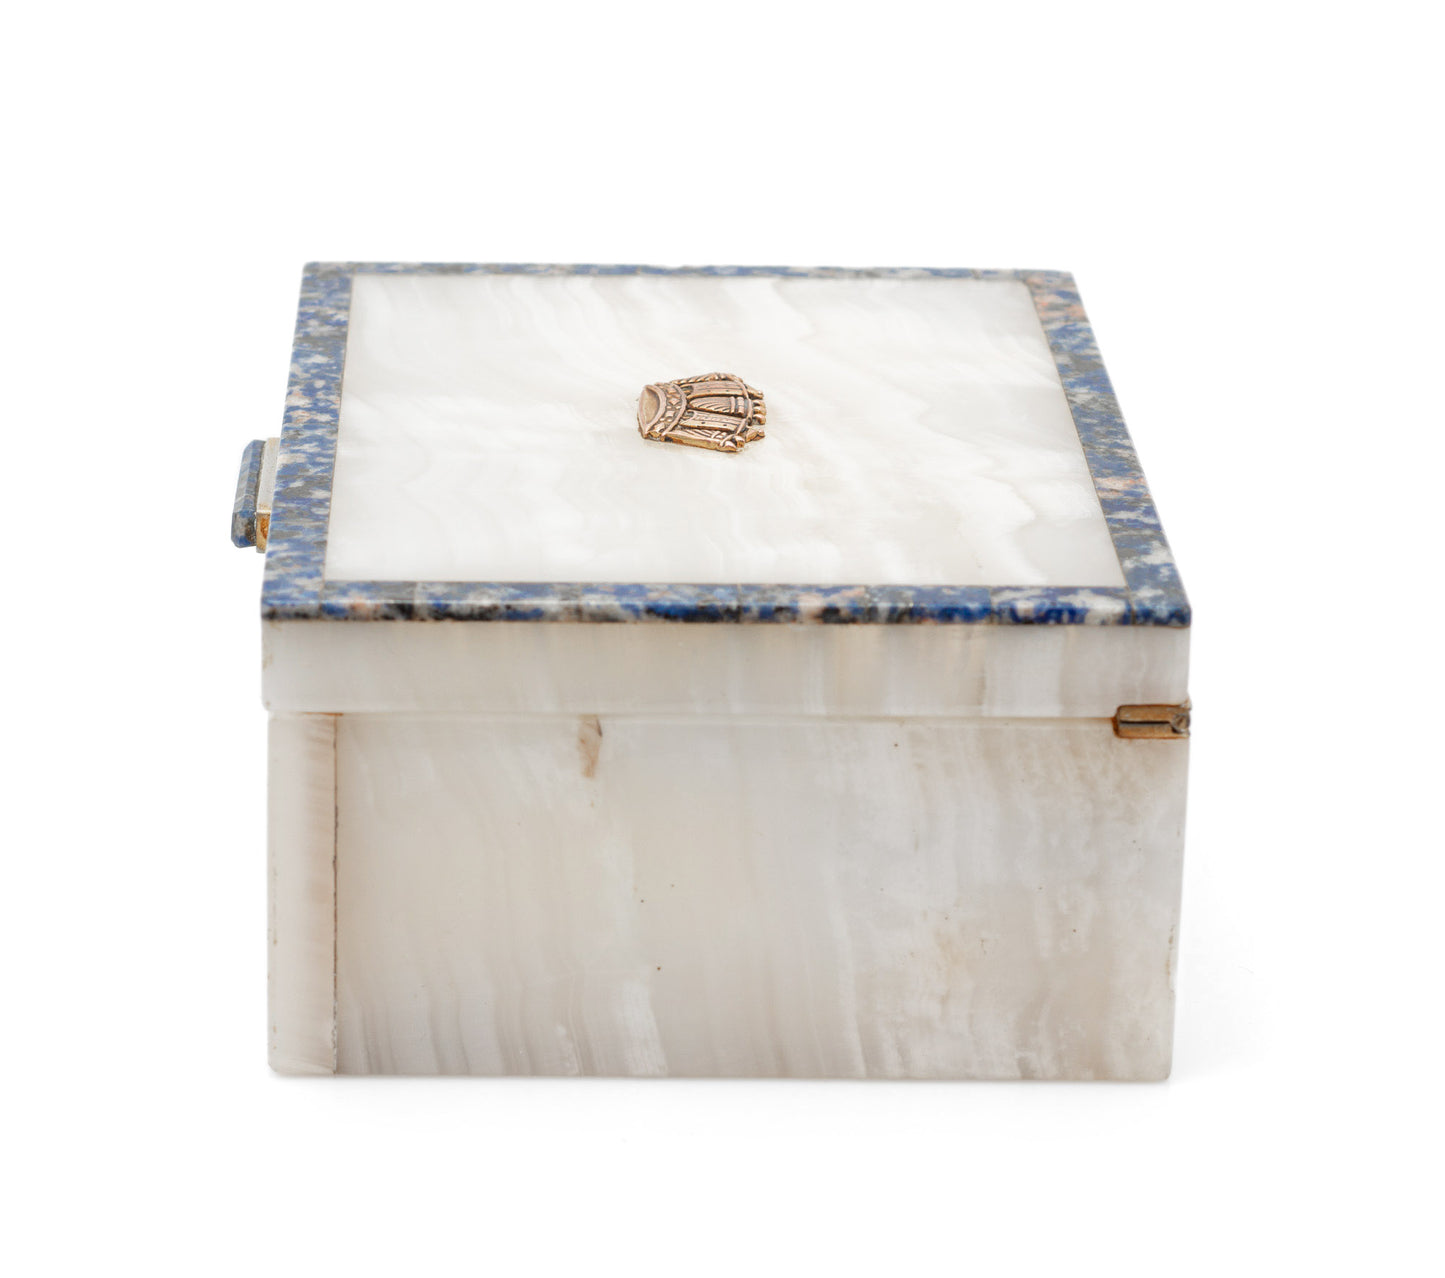 Fine Art Deco Onyx & Blue Stone Box with 9ct Gold Merchant Marine Navy Emblem (0560)